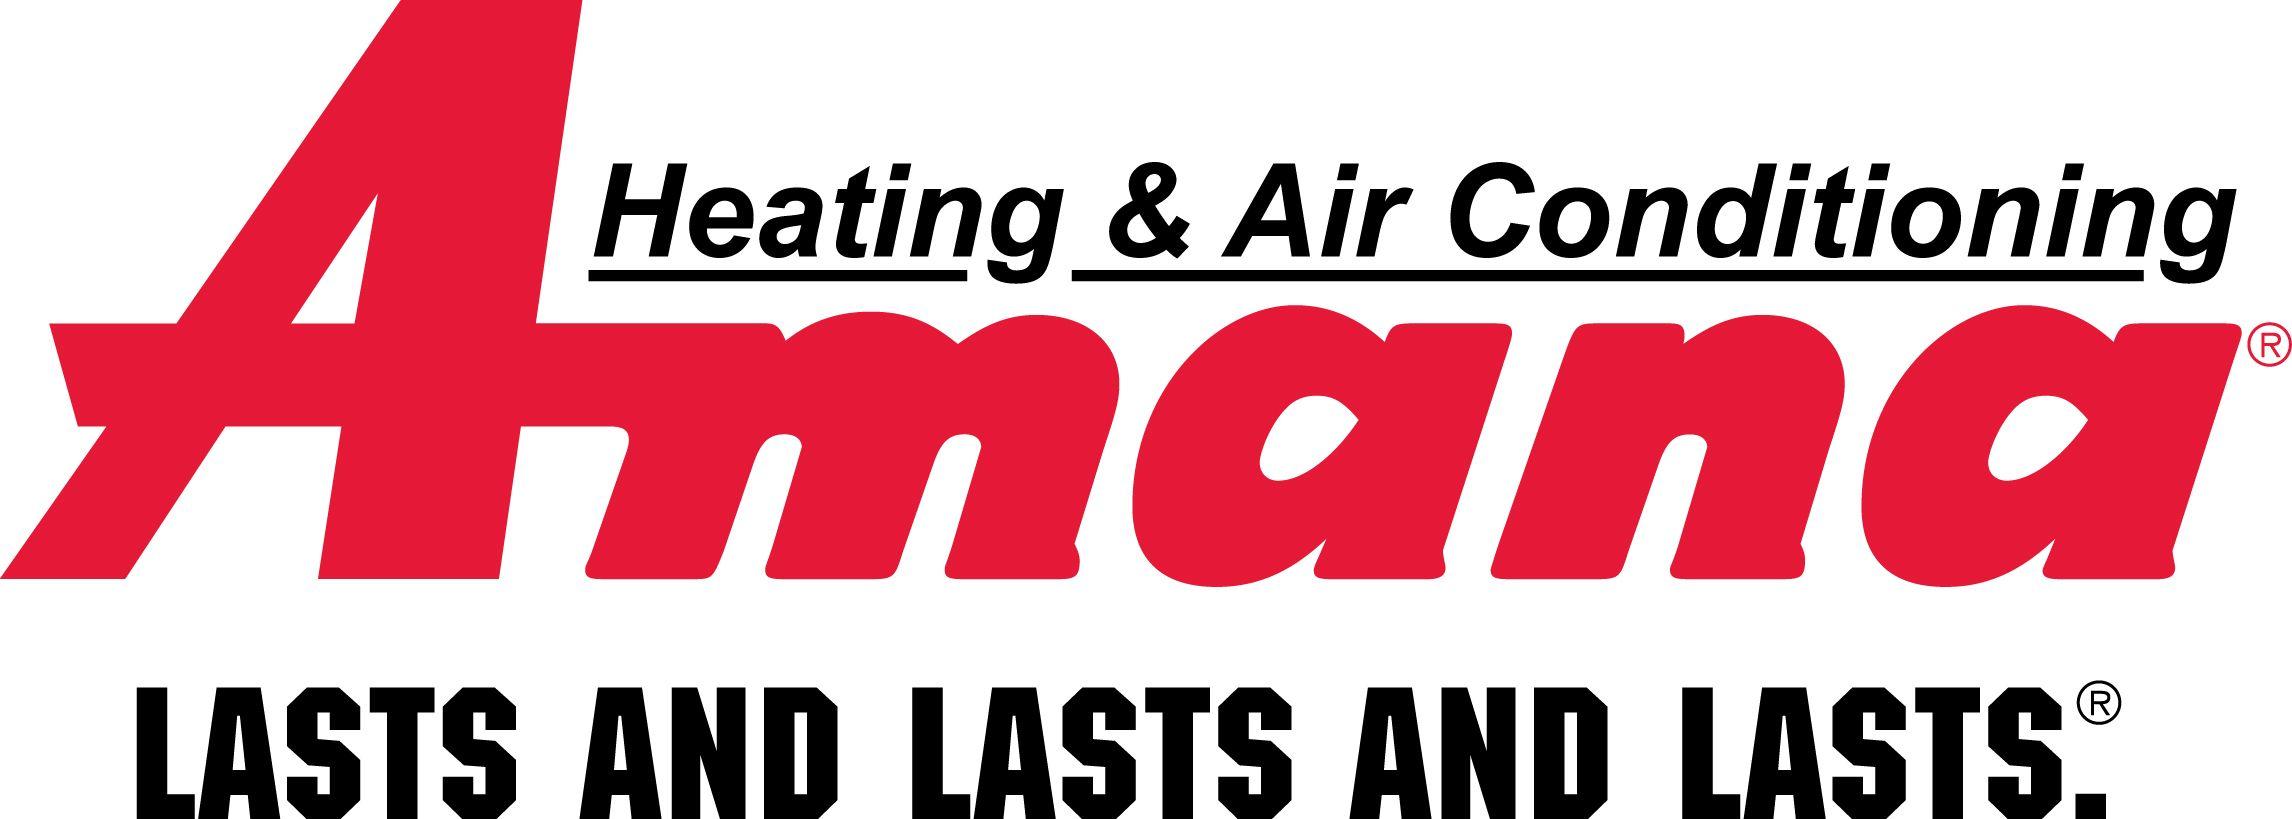 Amana Heating Logo - Amana Heating Air Conditioning - Zilka Heating and Cooling